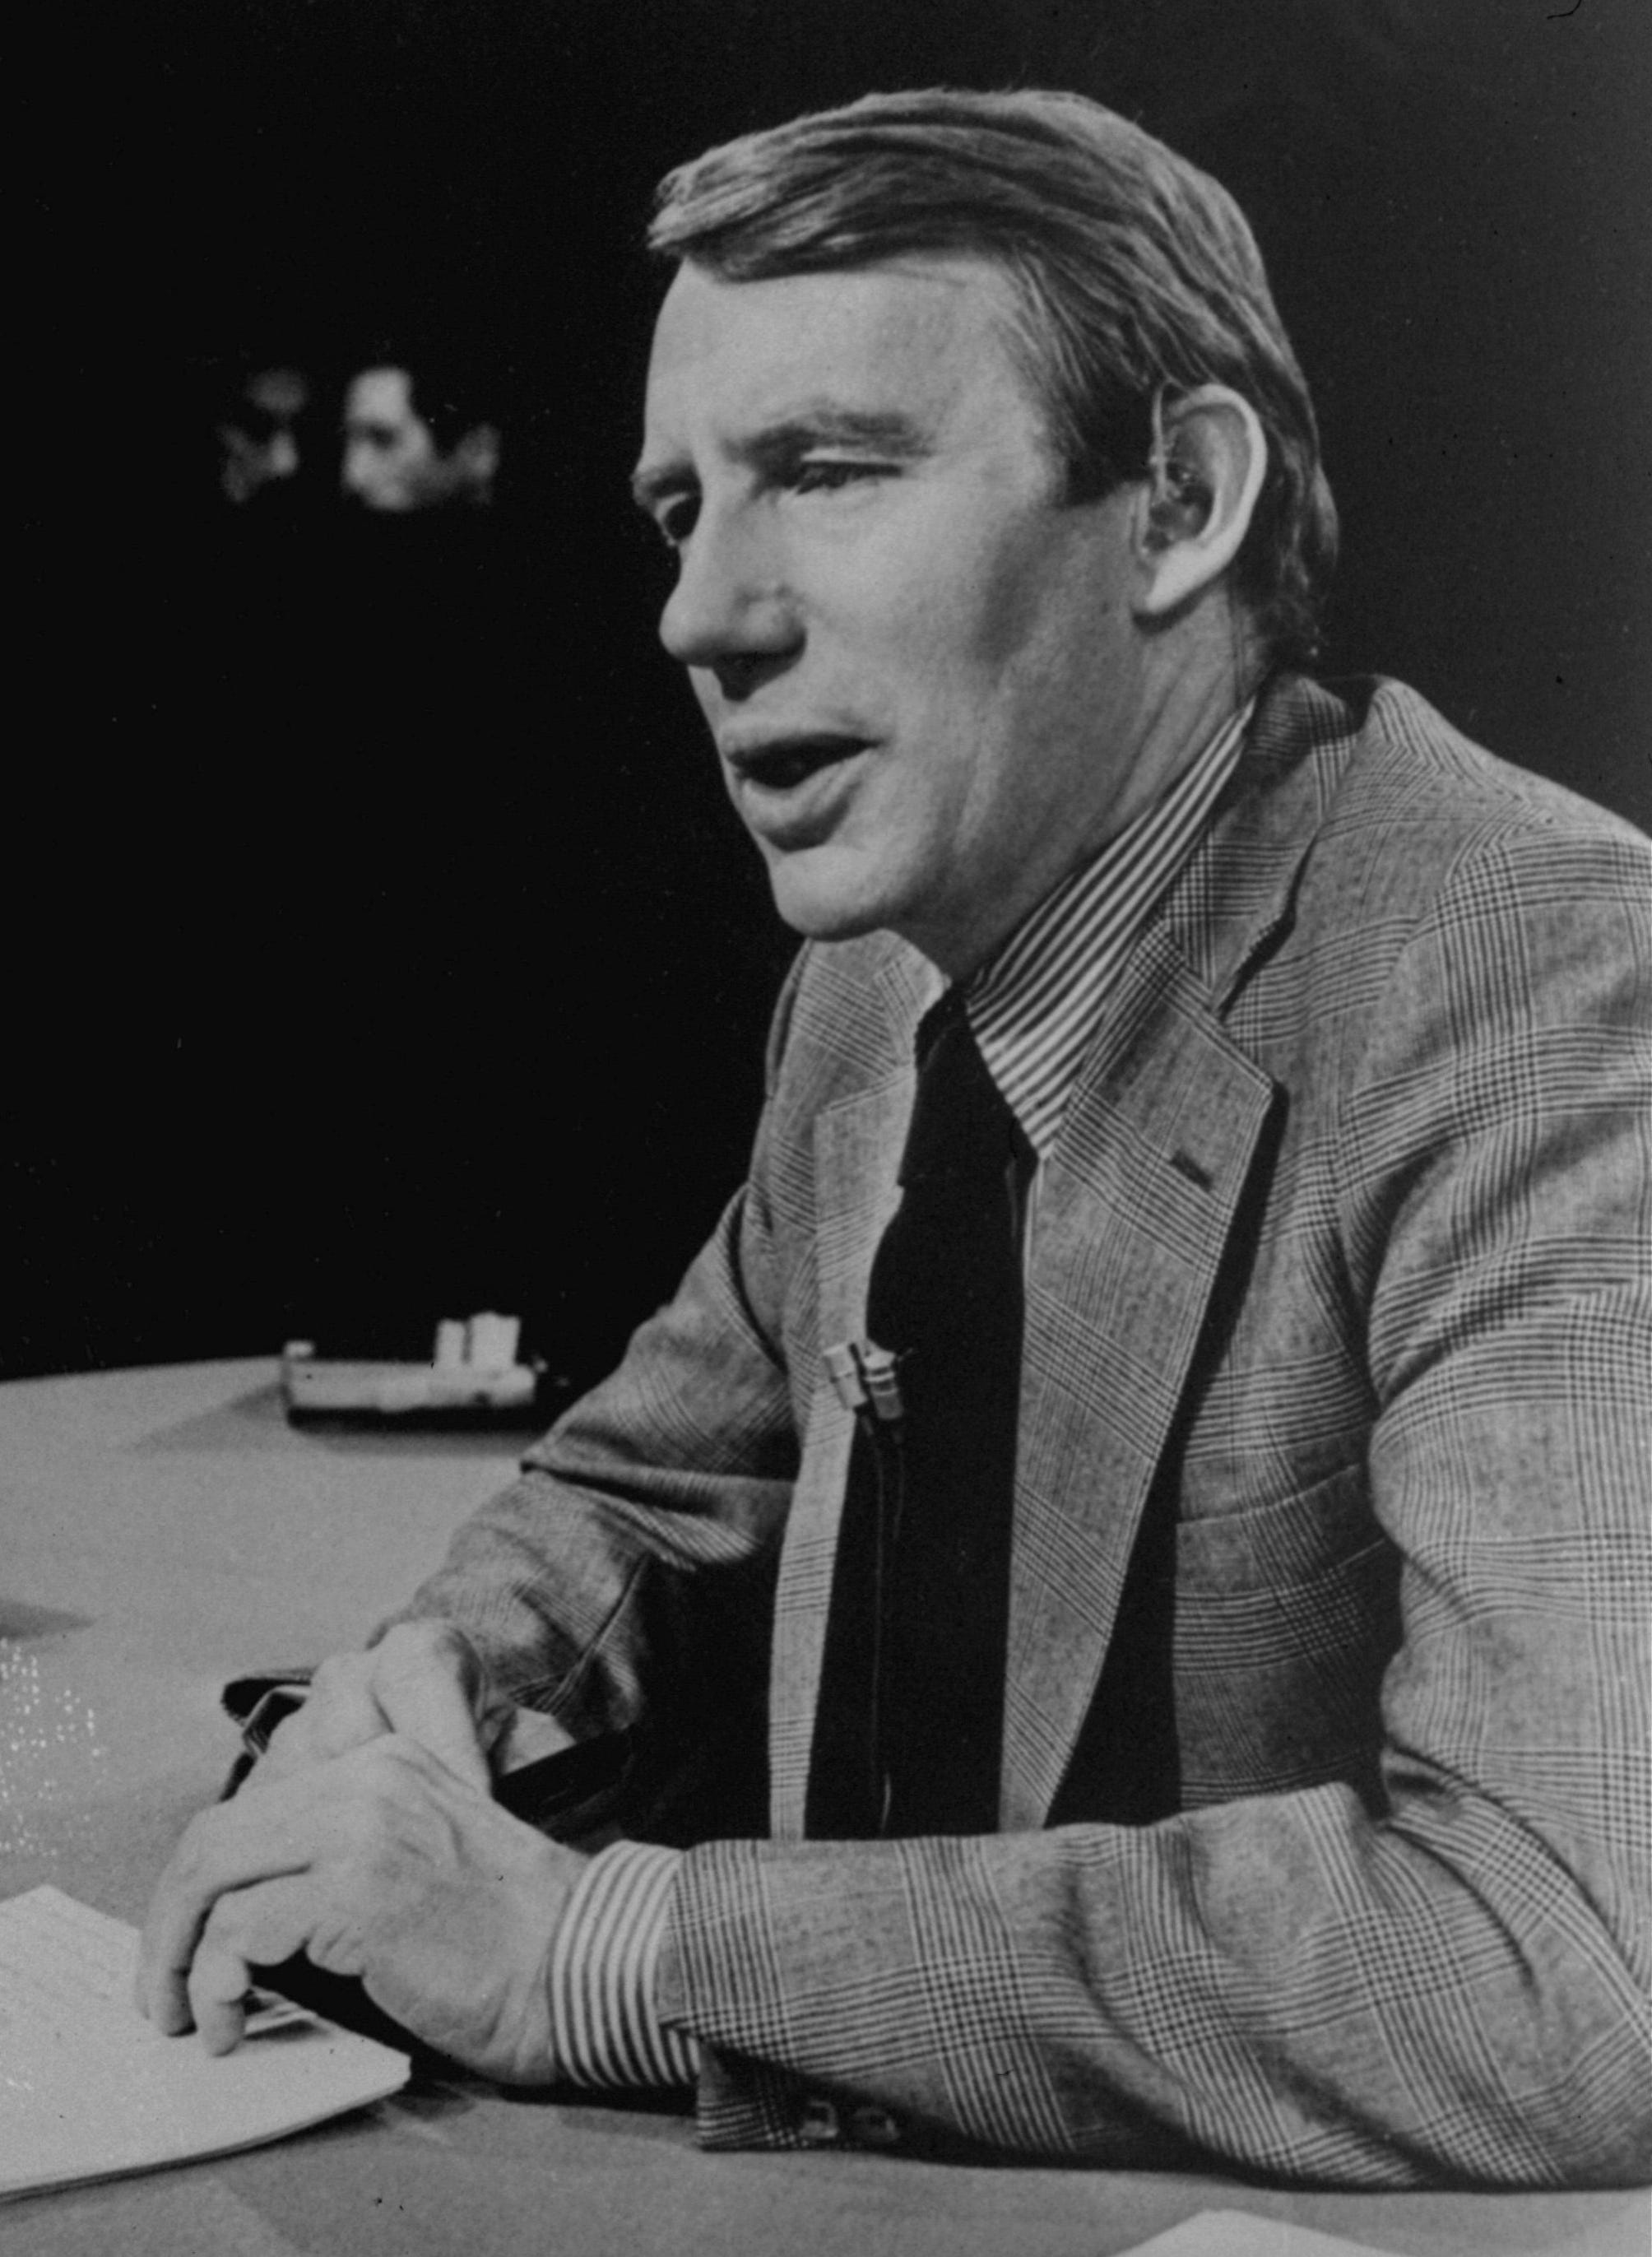 This Feb. 1978 photo shows Robert MacNeil, executive editor of "The MacNeil/Lehrer Report".